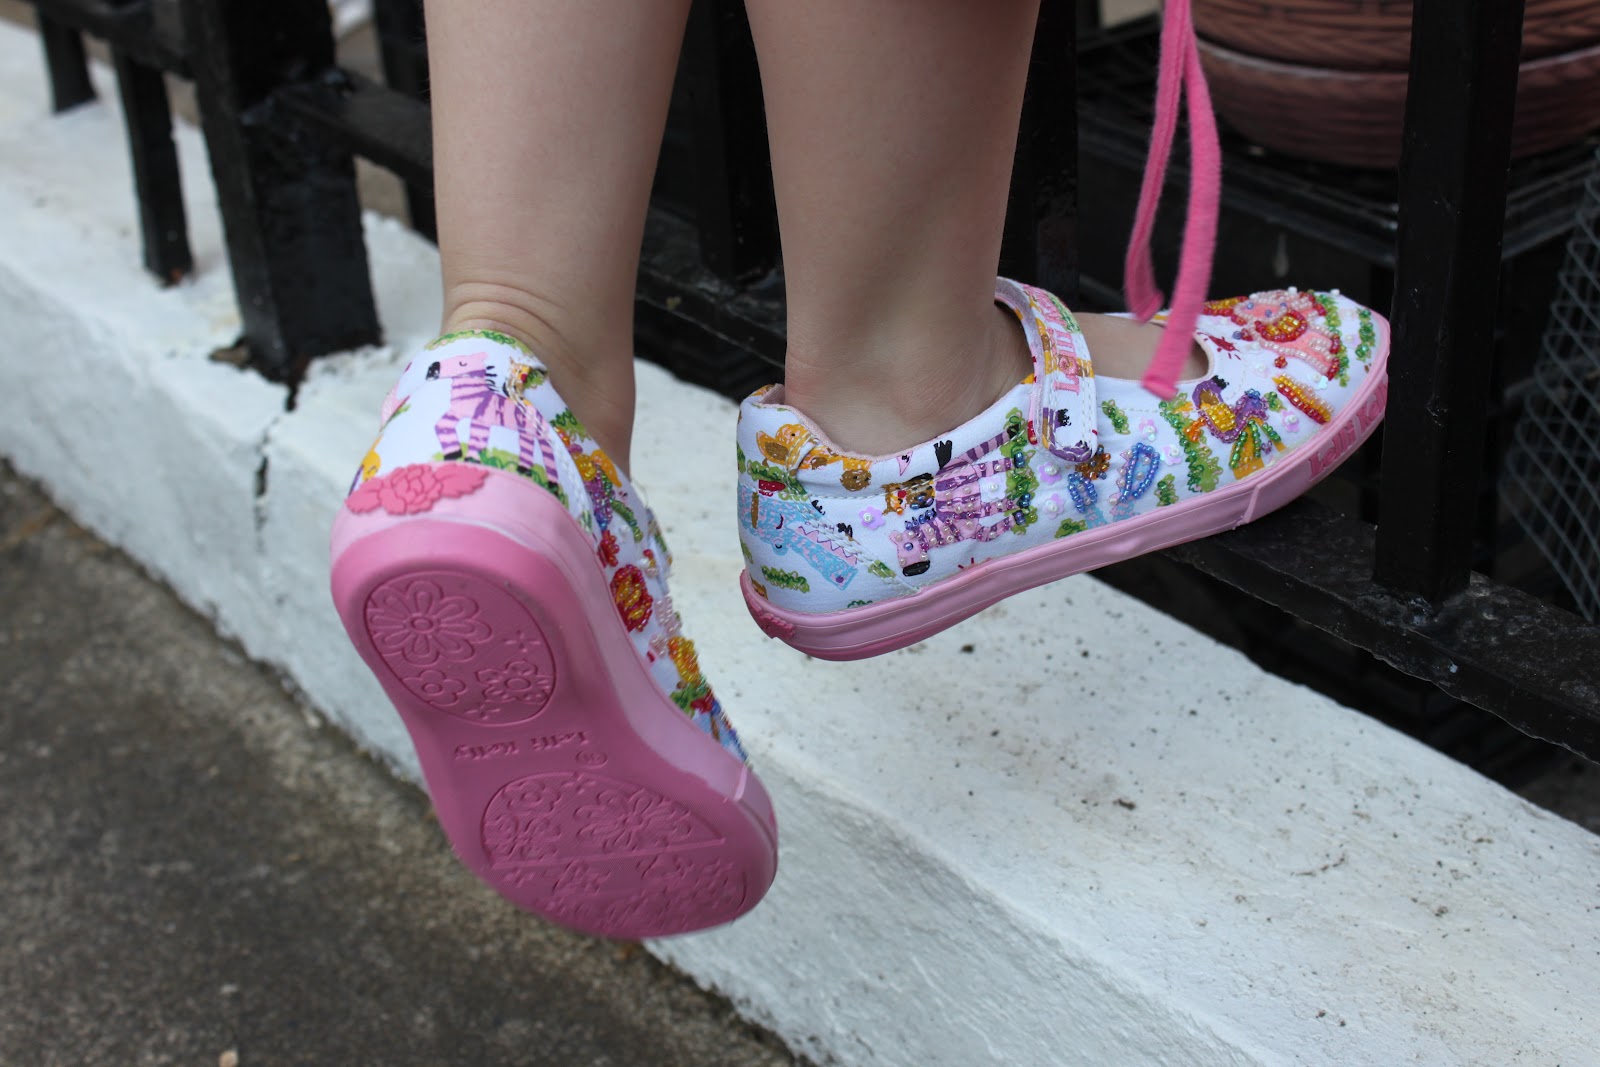 Susan's Disney Family: Lelli Kelly great shoes for little girls!